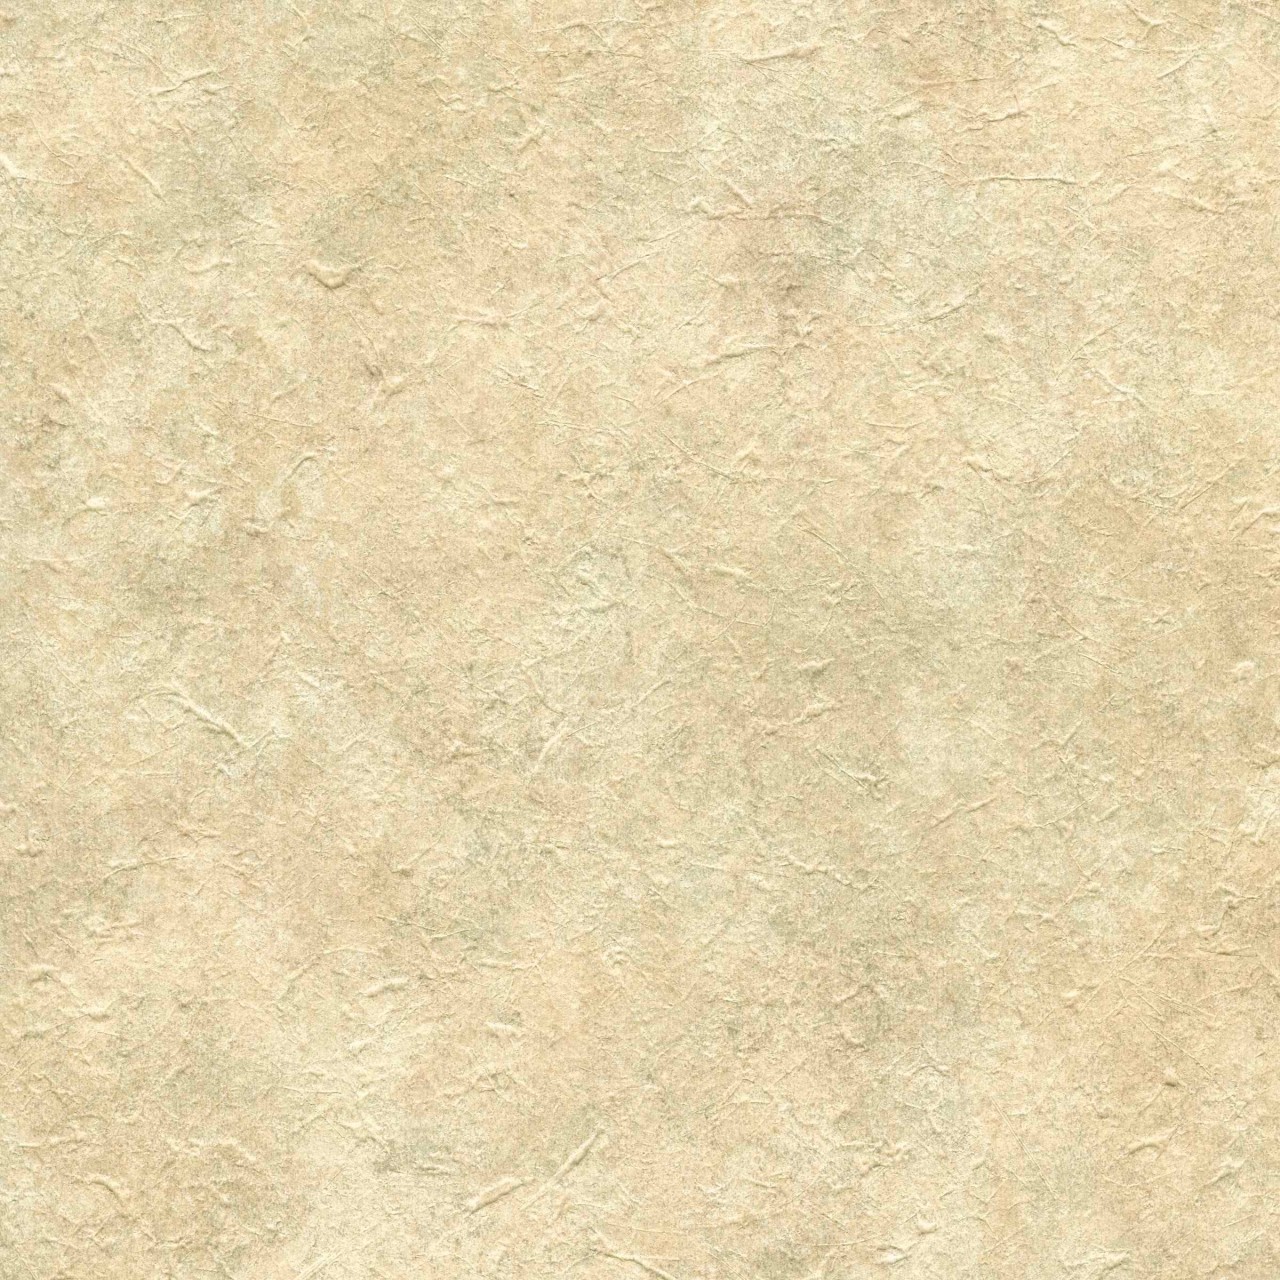 Tan 98w2210 Faux Stone Wallpaper Textures